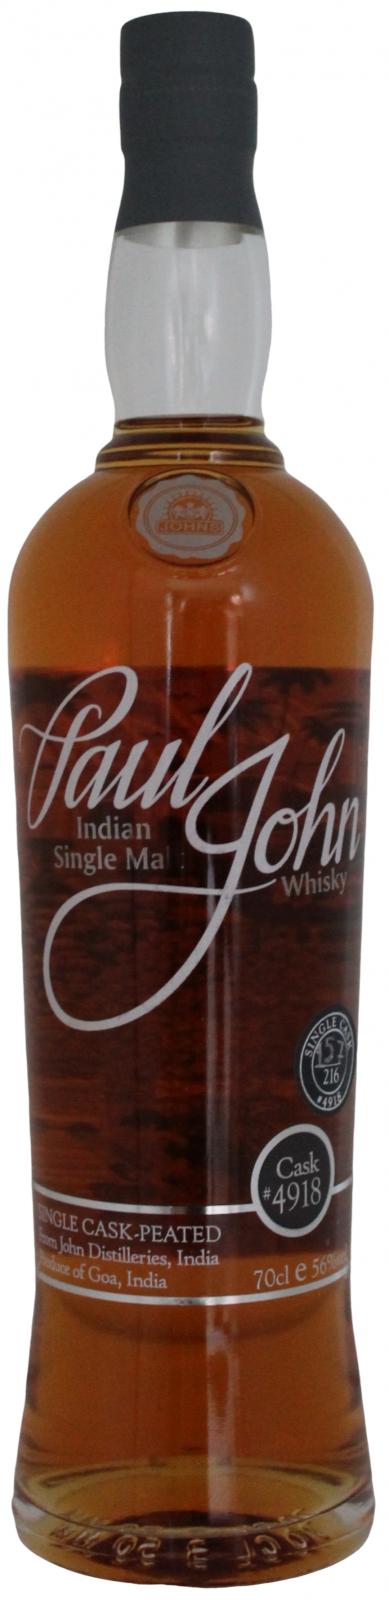 Paul John Single Cask Peated #4918 The Nectar 56% 700ml